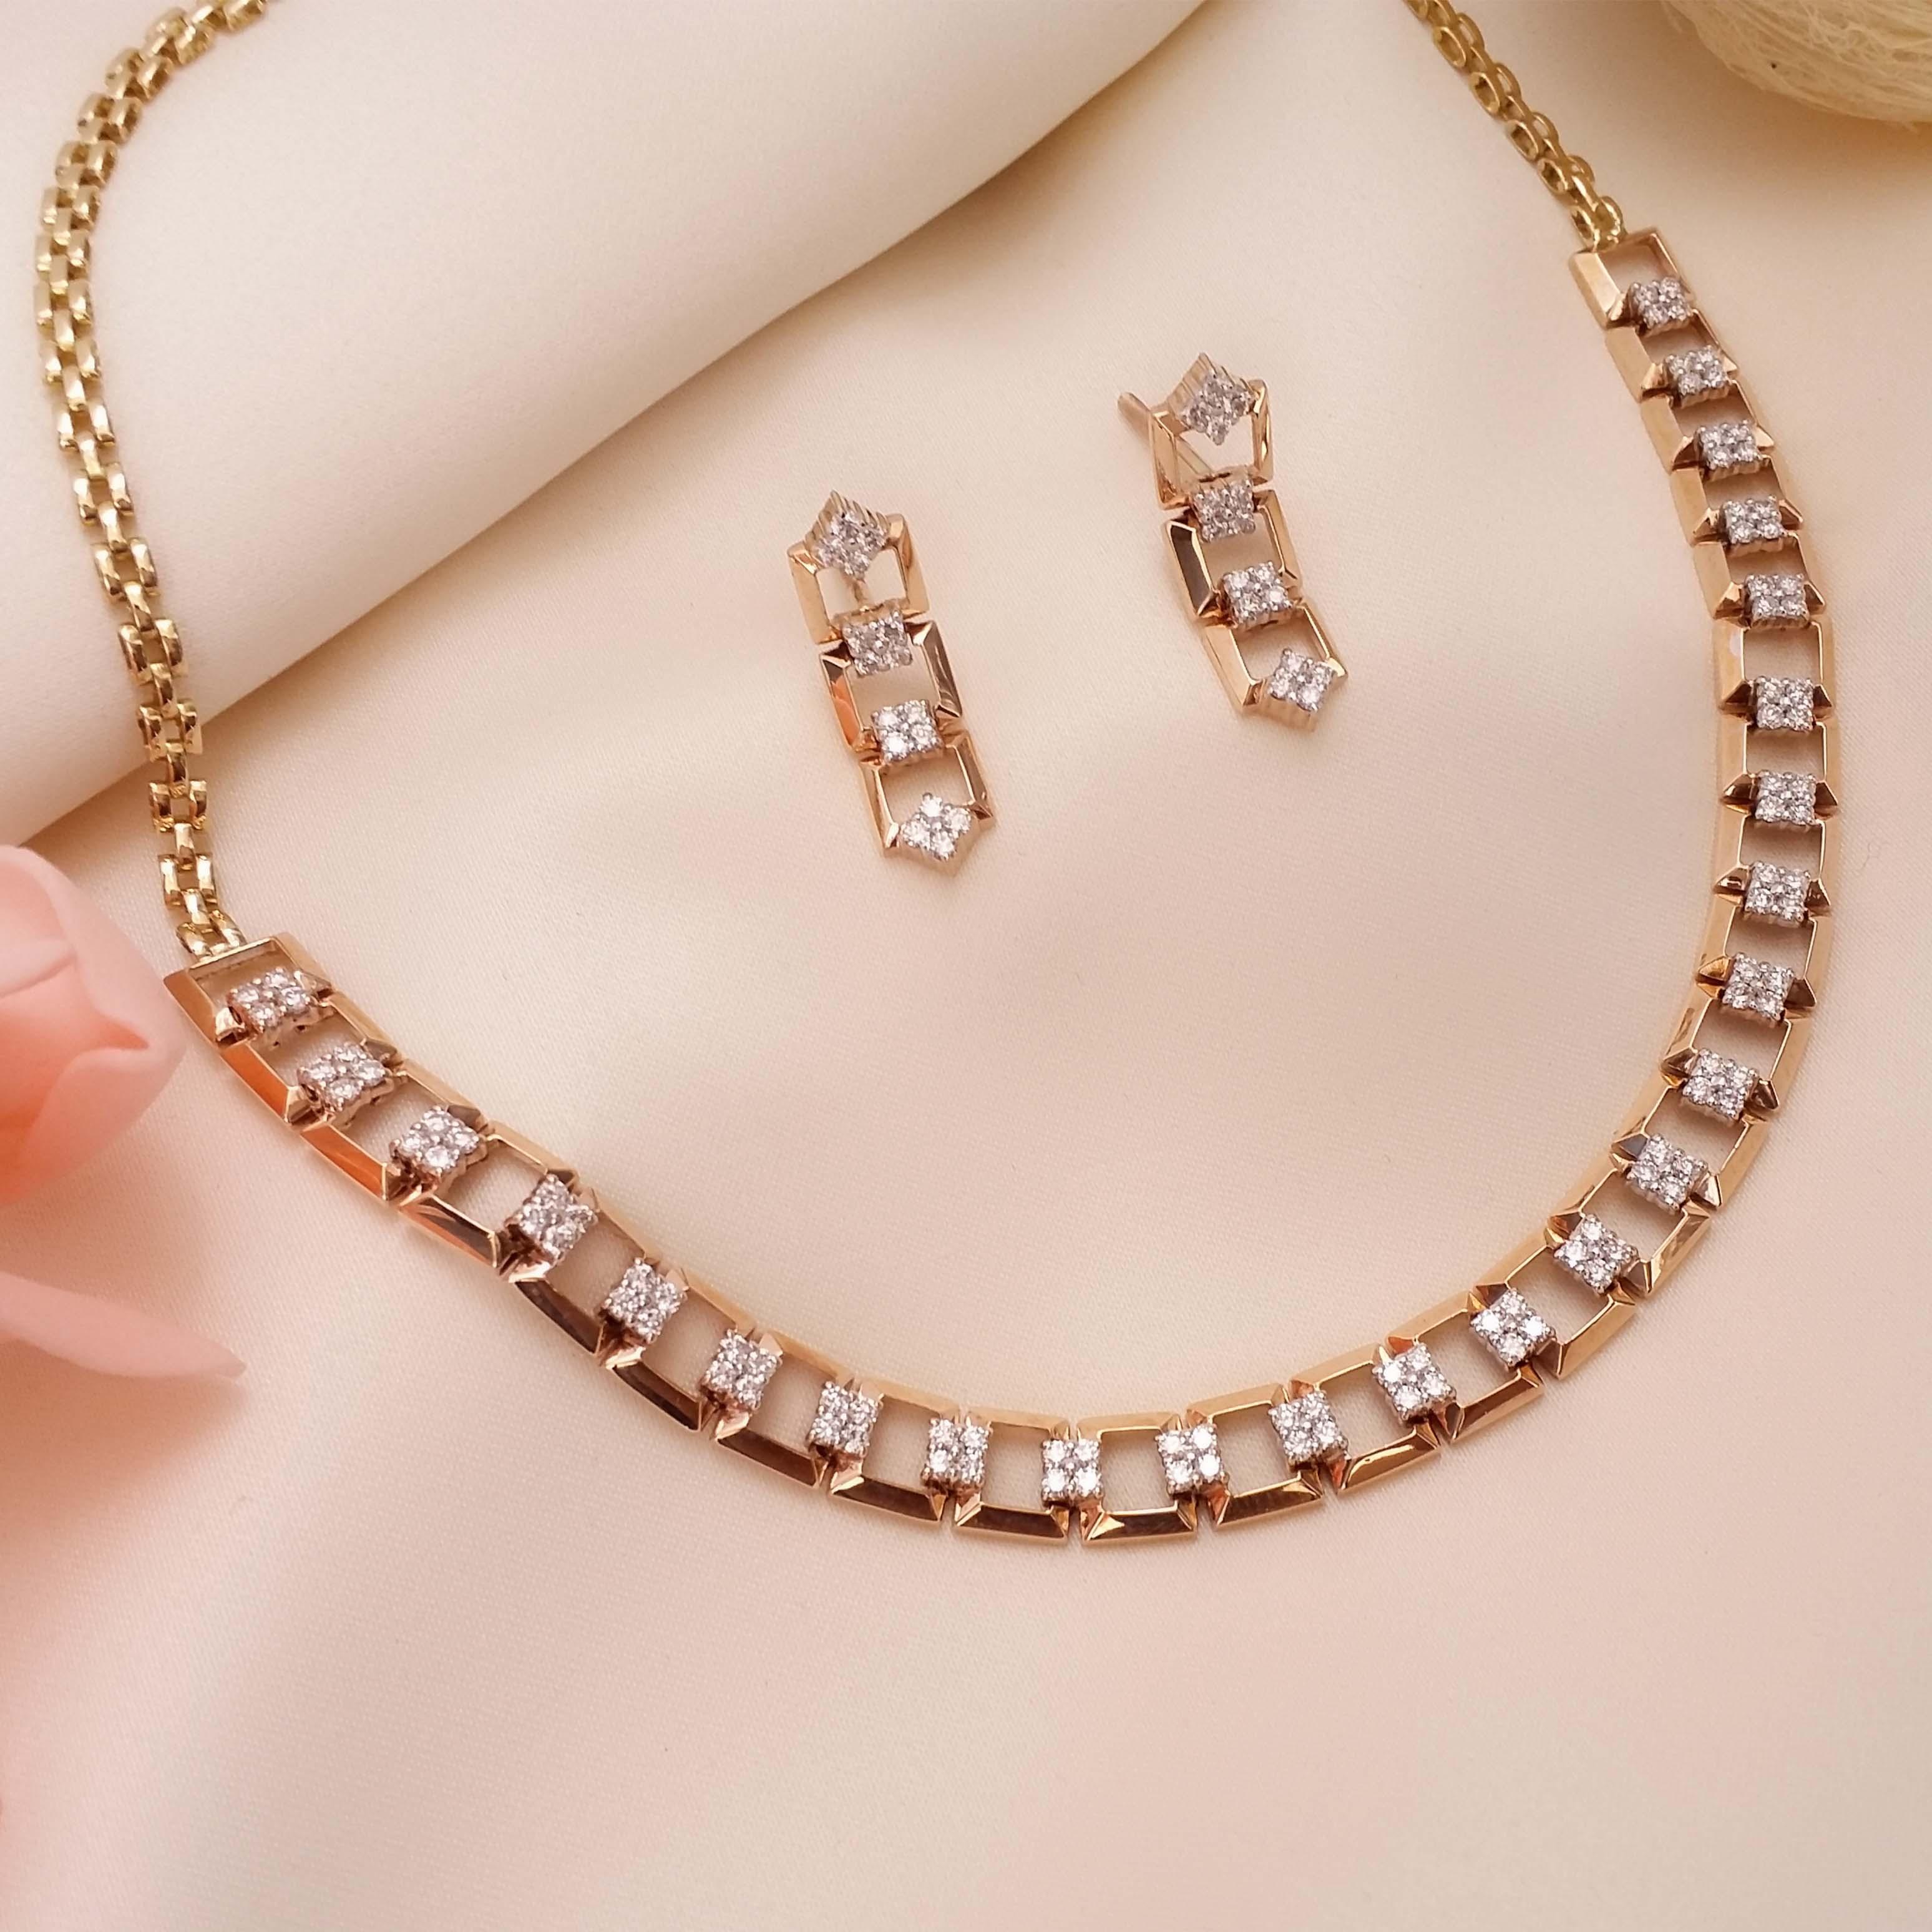 8 Stone Diamond Necklace